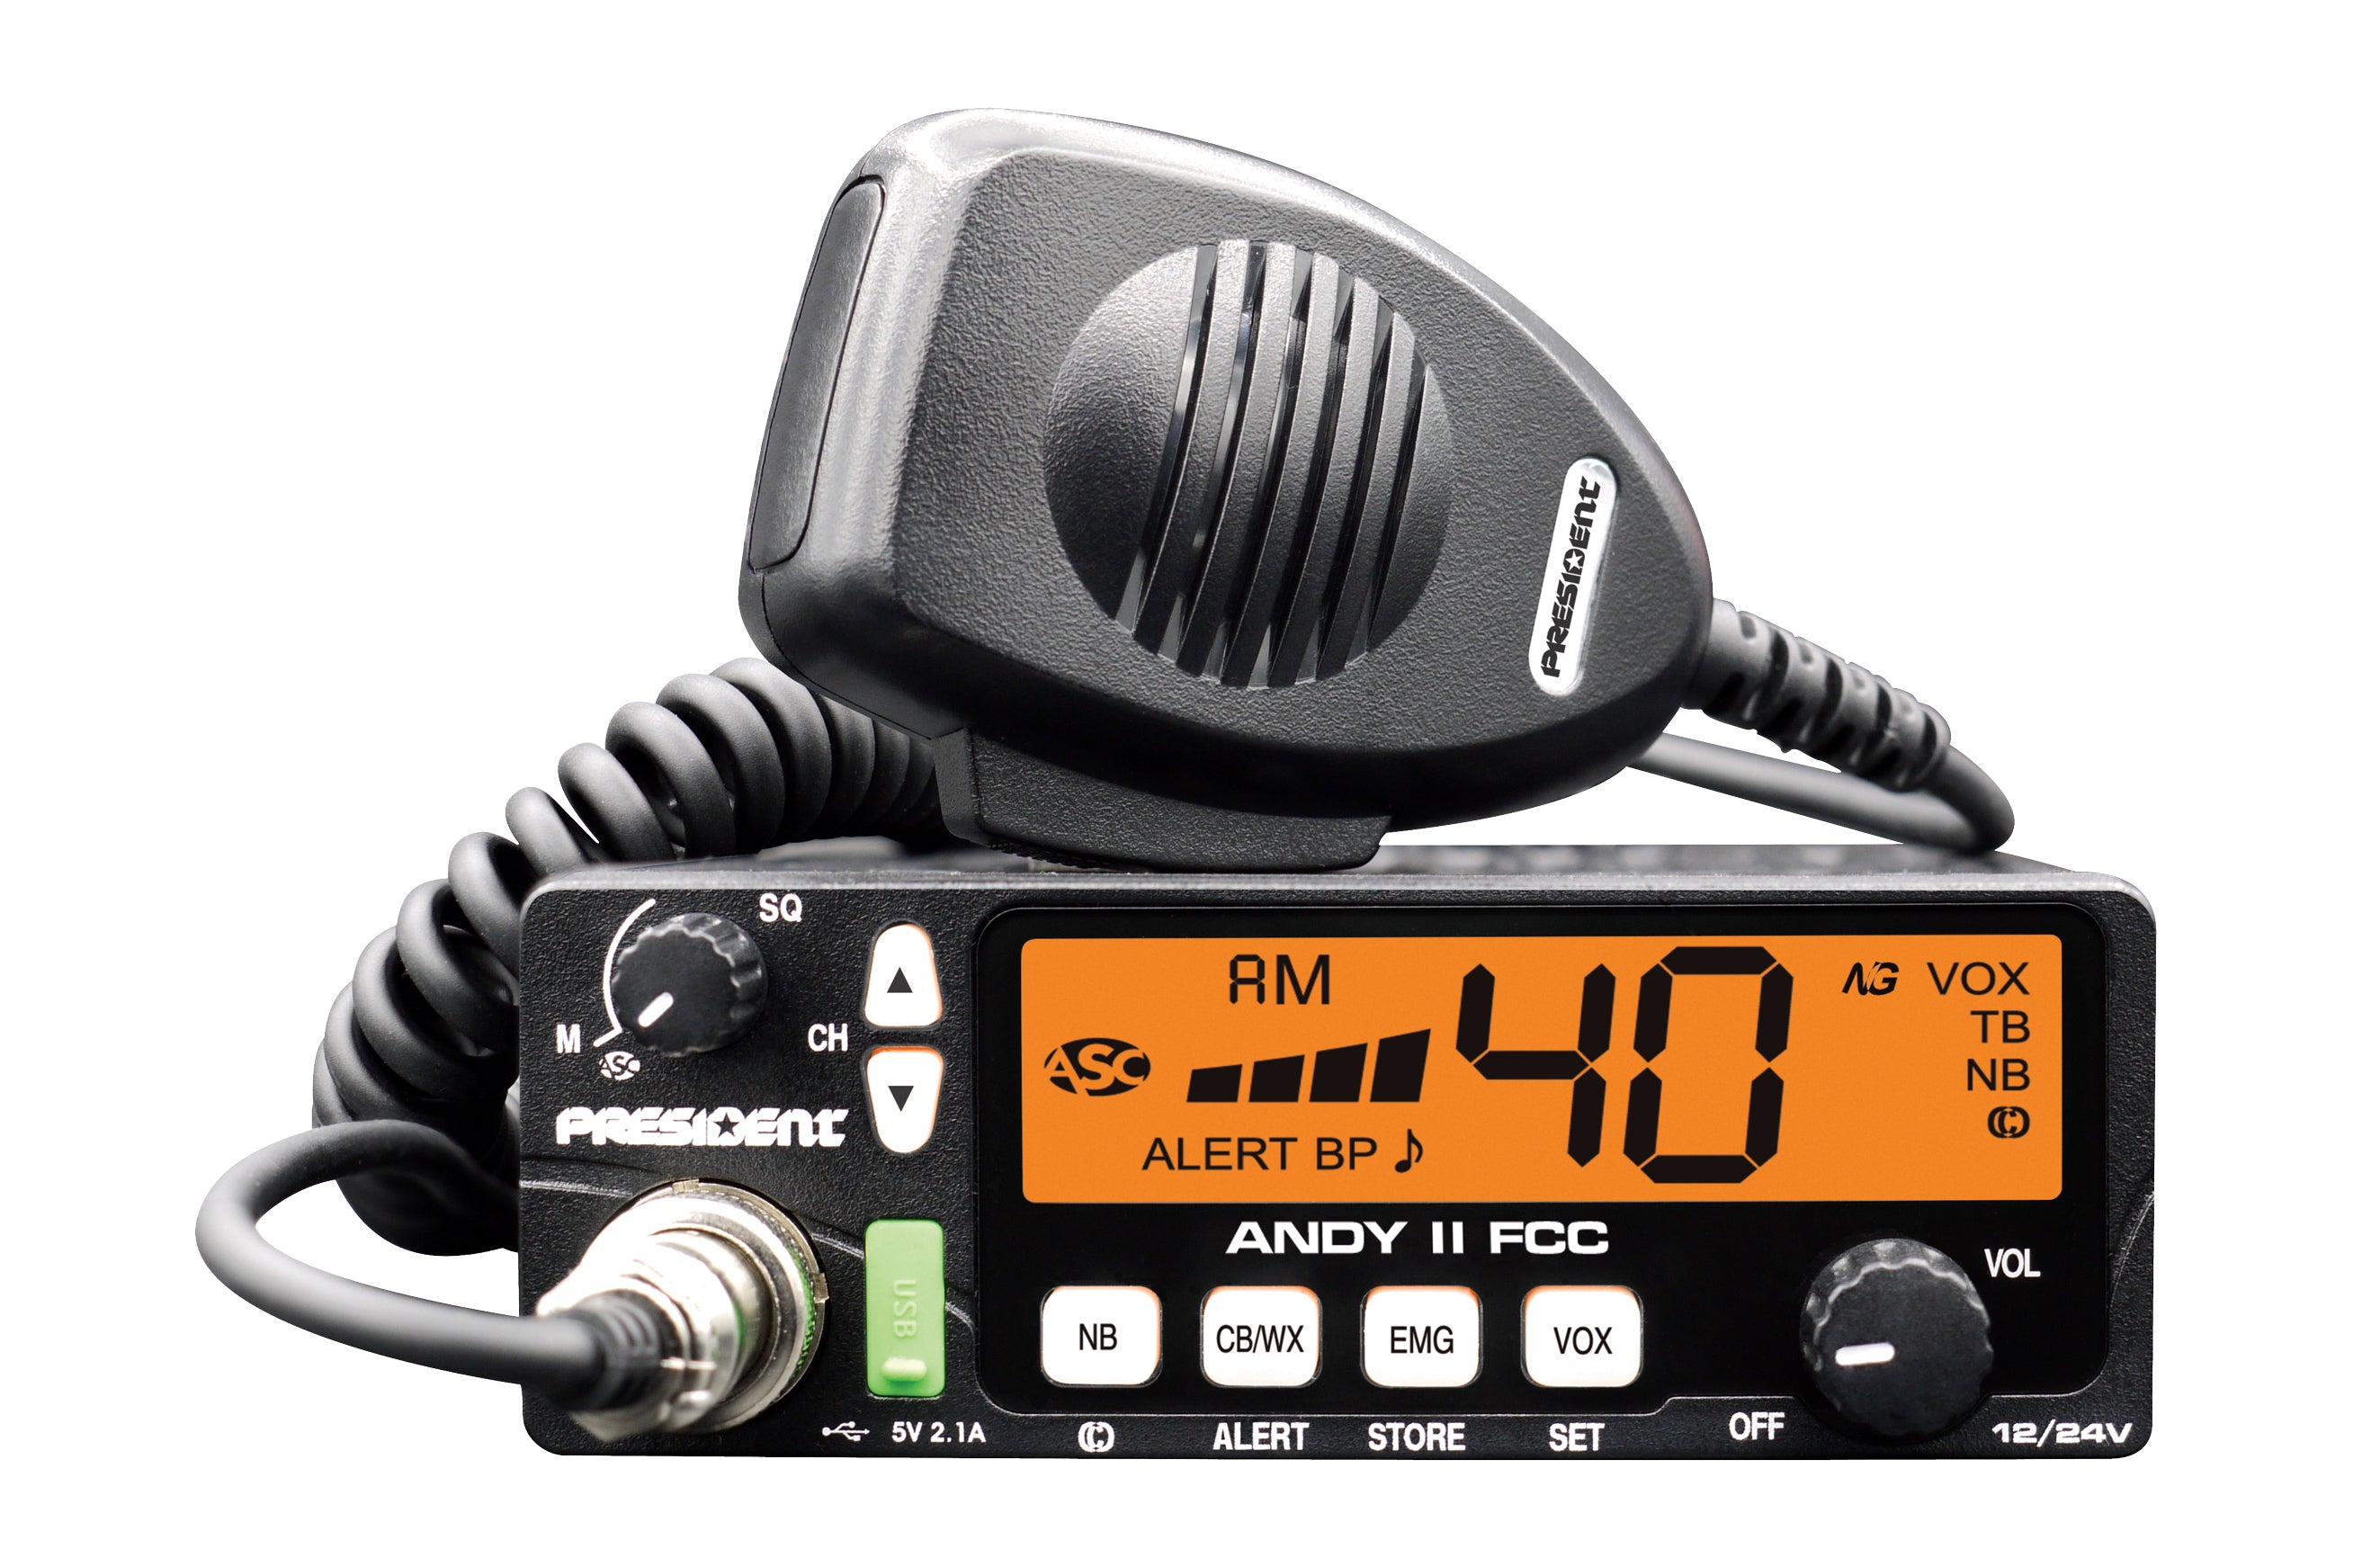 President Electronics ANDY II FCC 12-24 VDC 40 Channel CB Radio